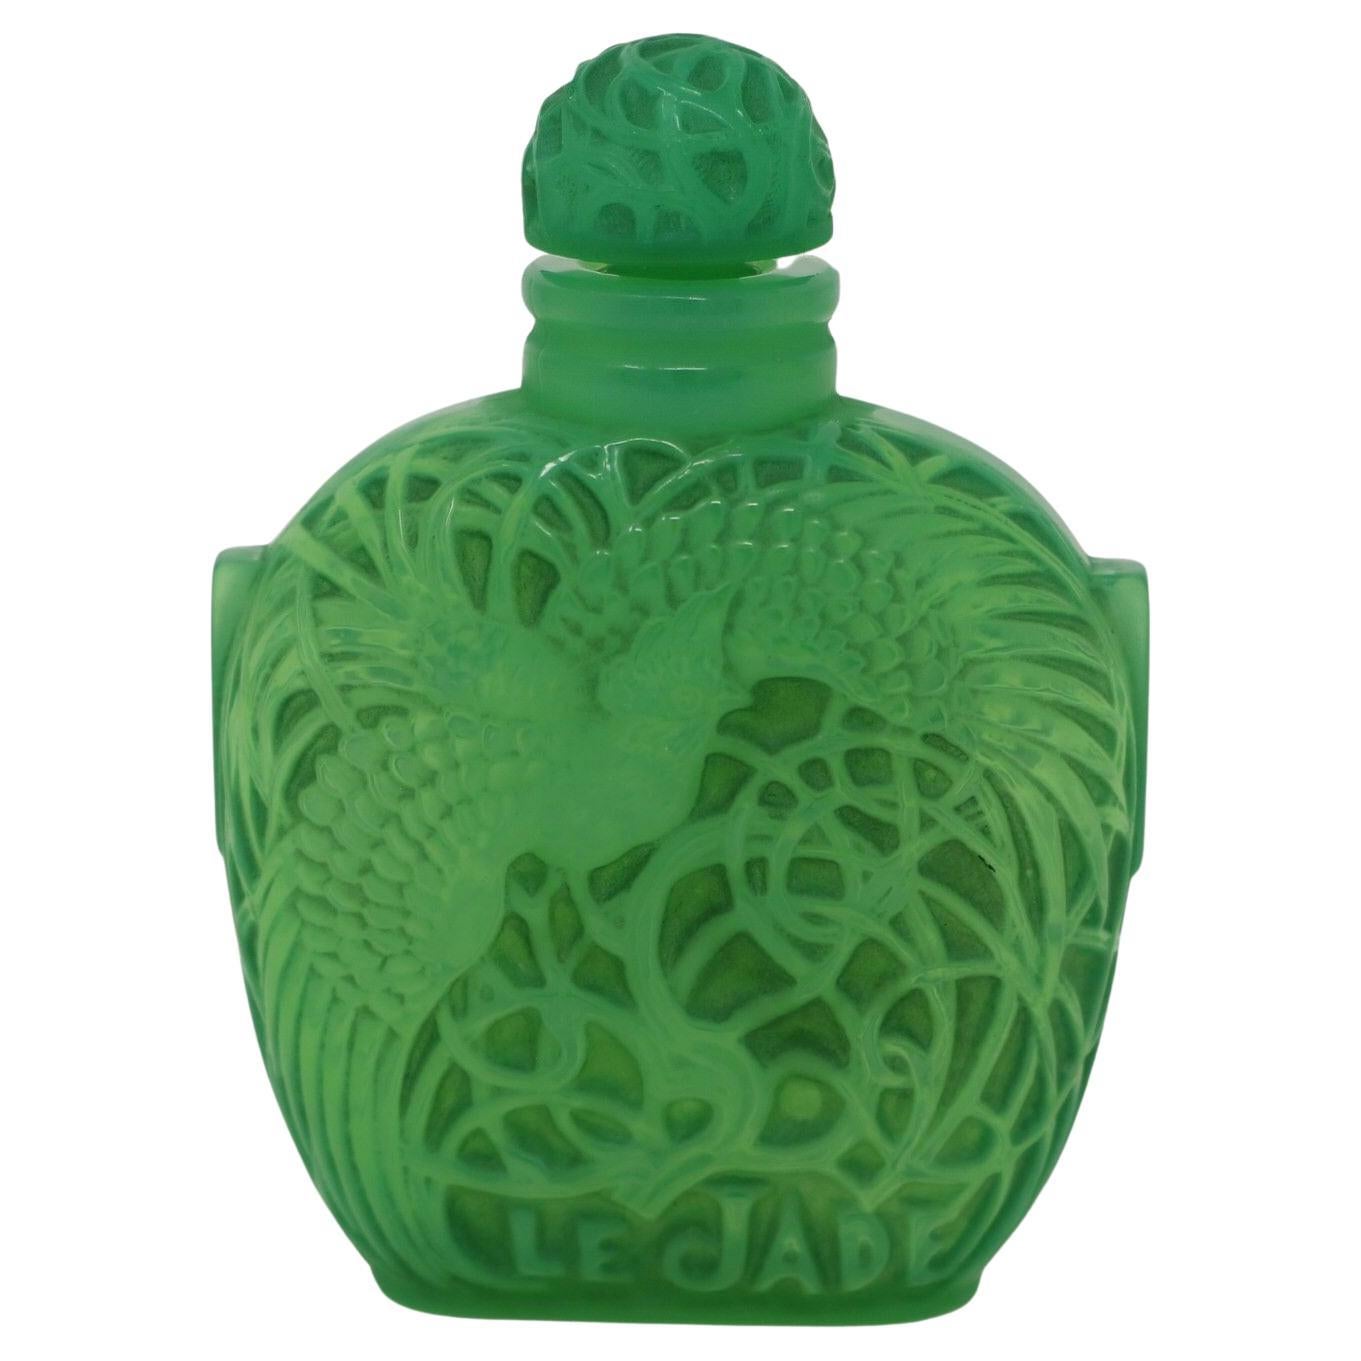 Rene Lalique Green Glass 'Le Jade' Perfume Bottle